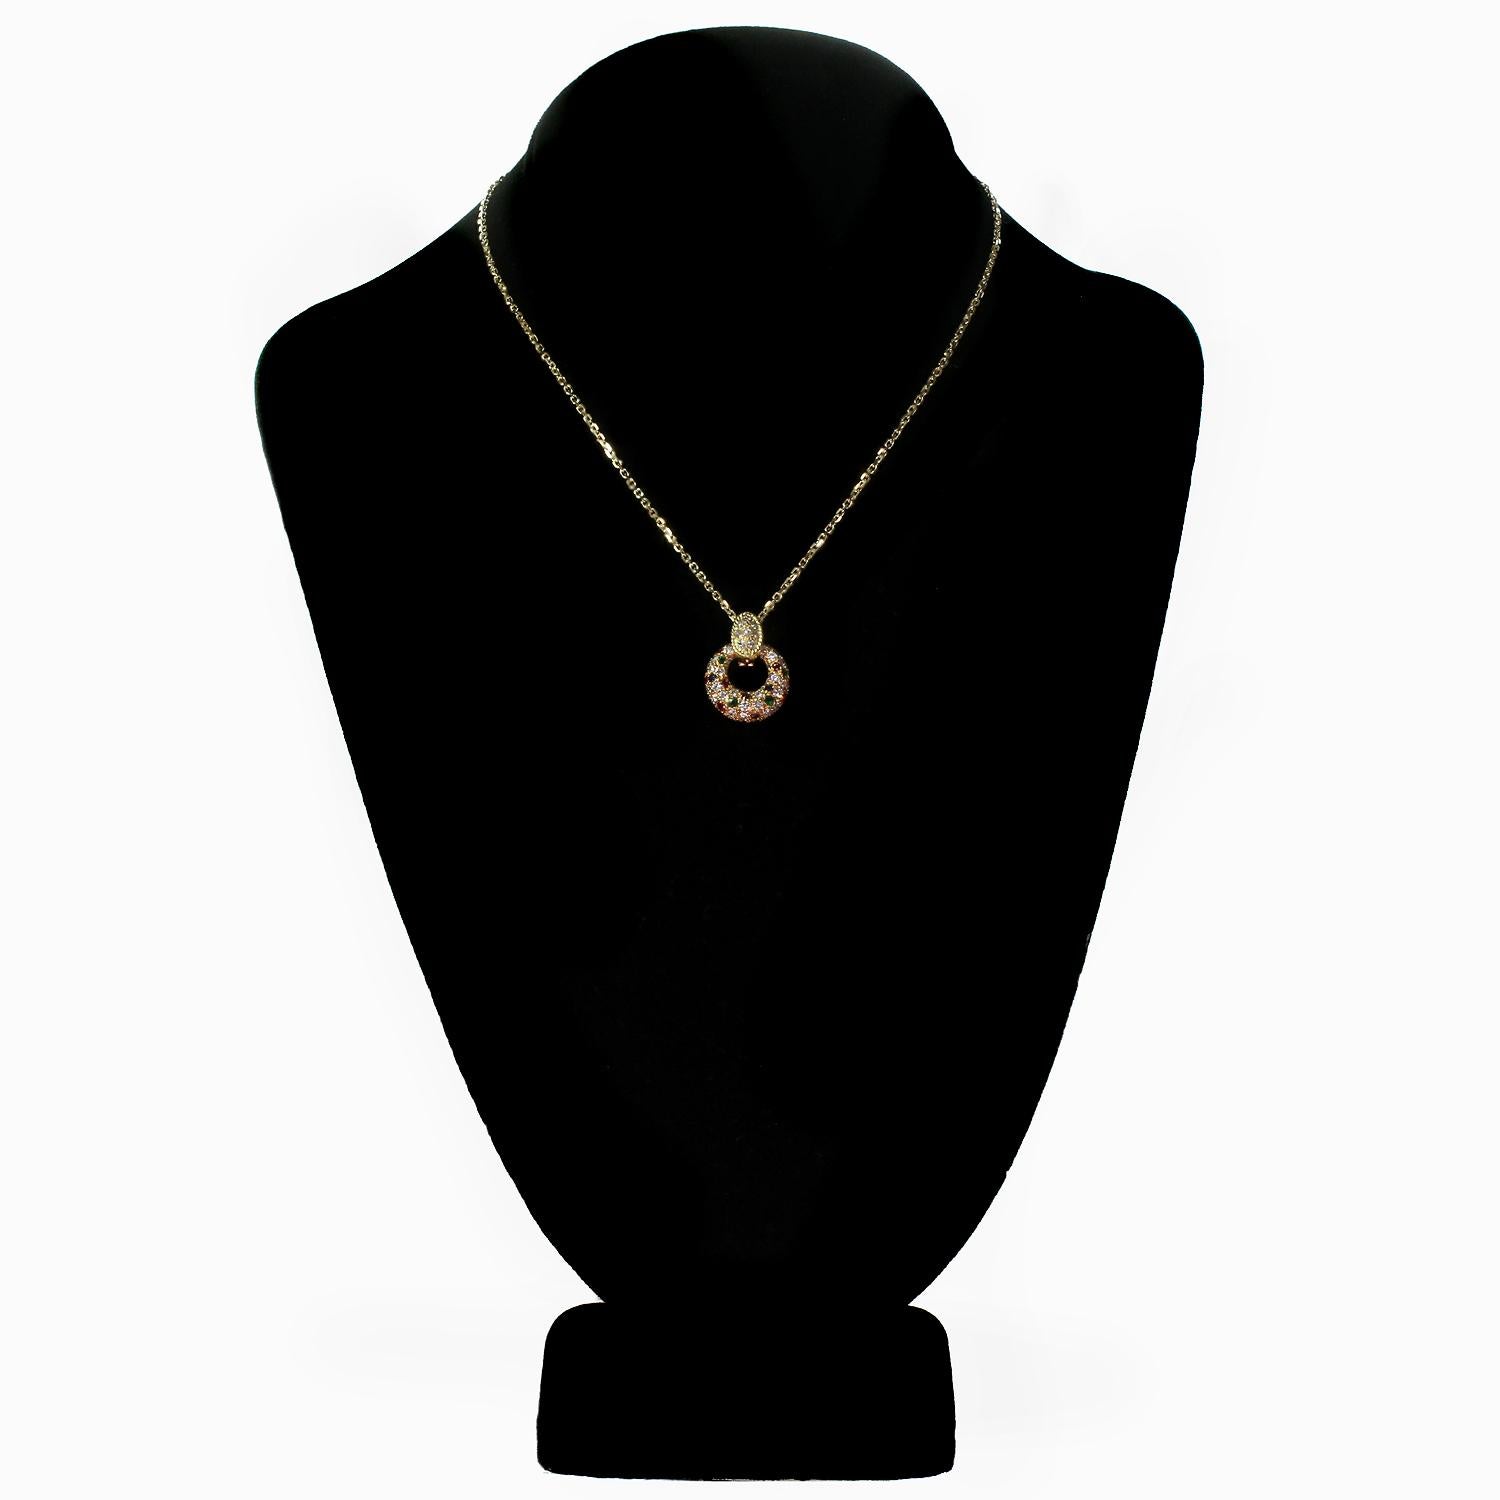 Brilliant Cut Van Cleef & Arpels Diamond Gemstone Yellow Interchangeable Pendant Necklace